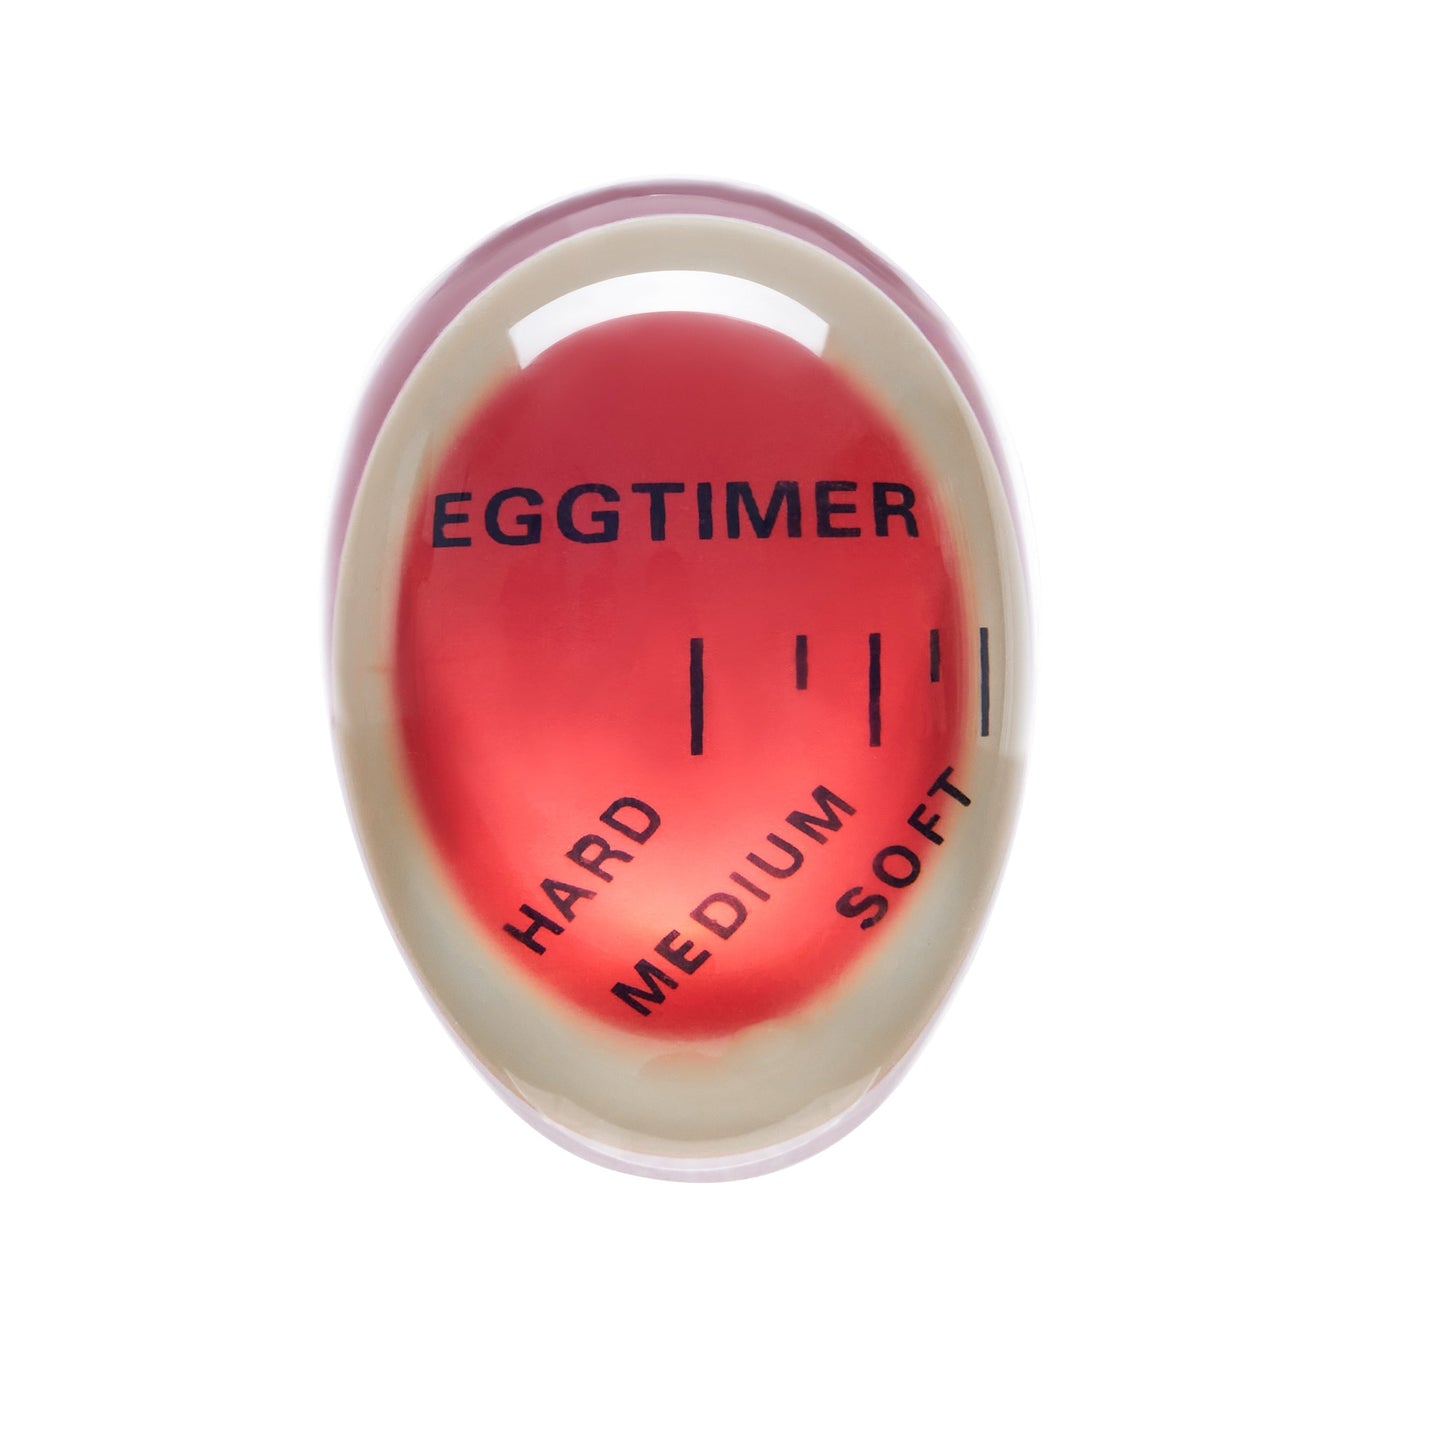  Eggtimer sold by Fleurlovin, Free Shipping Worldwide